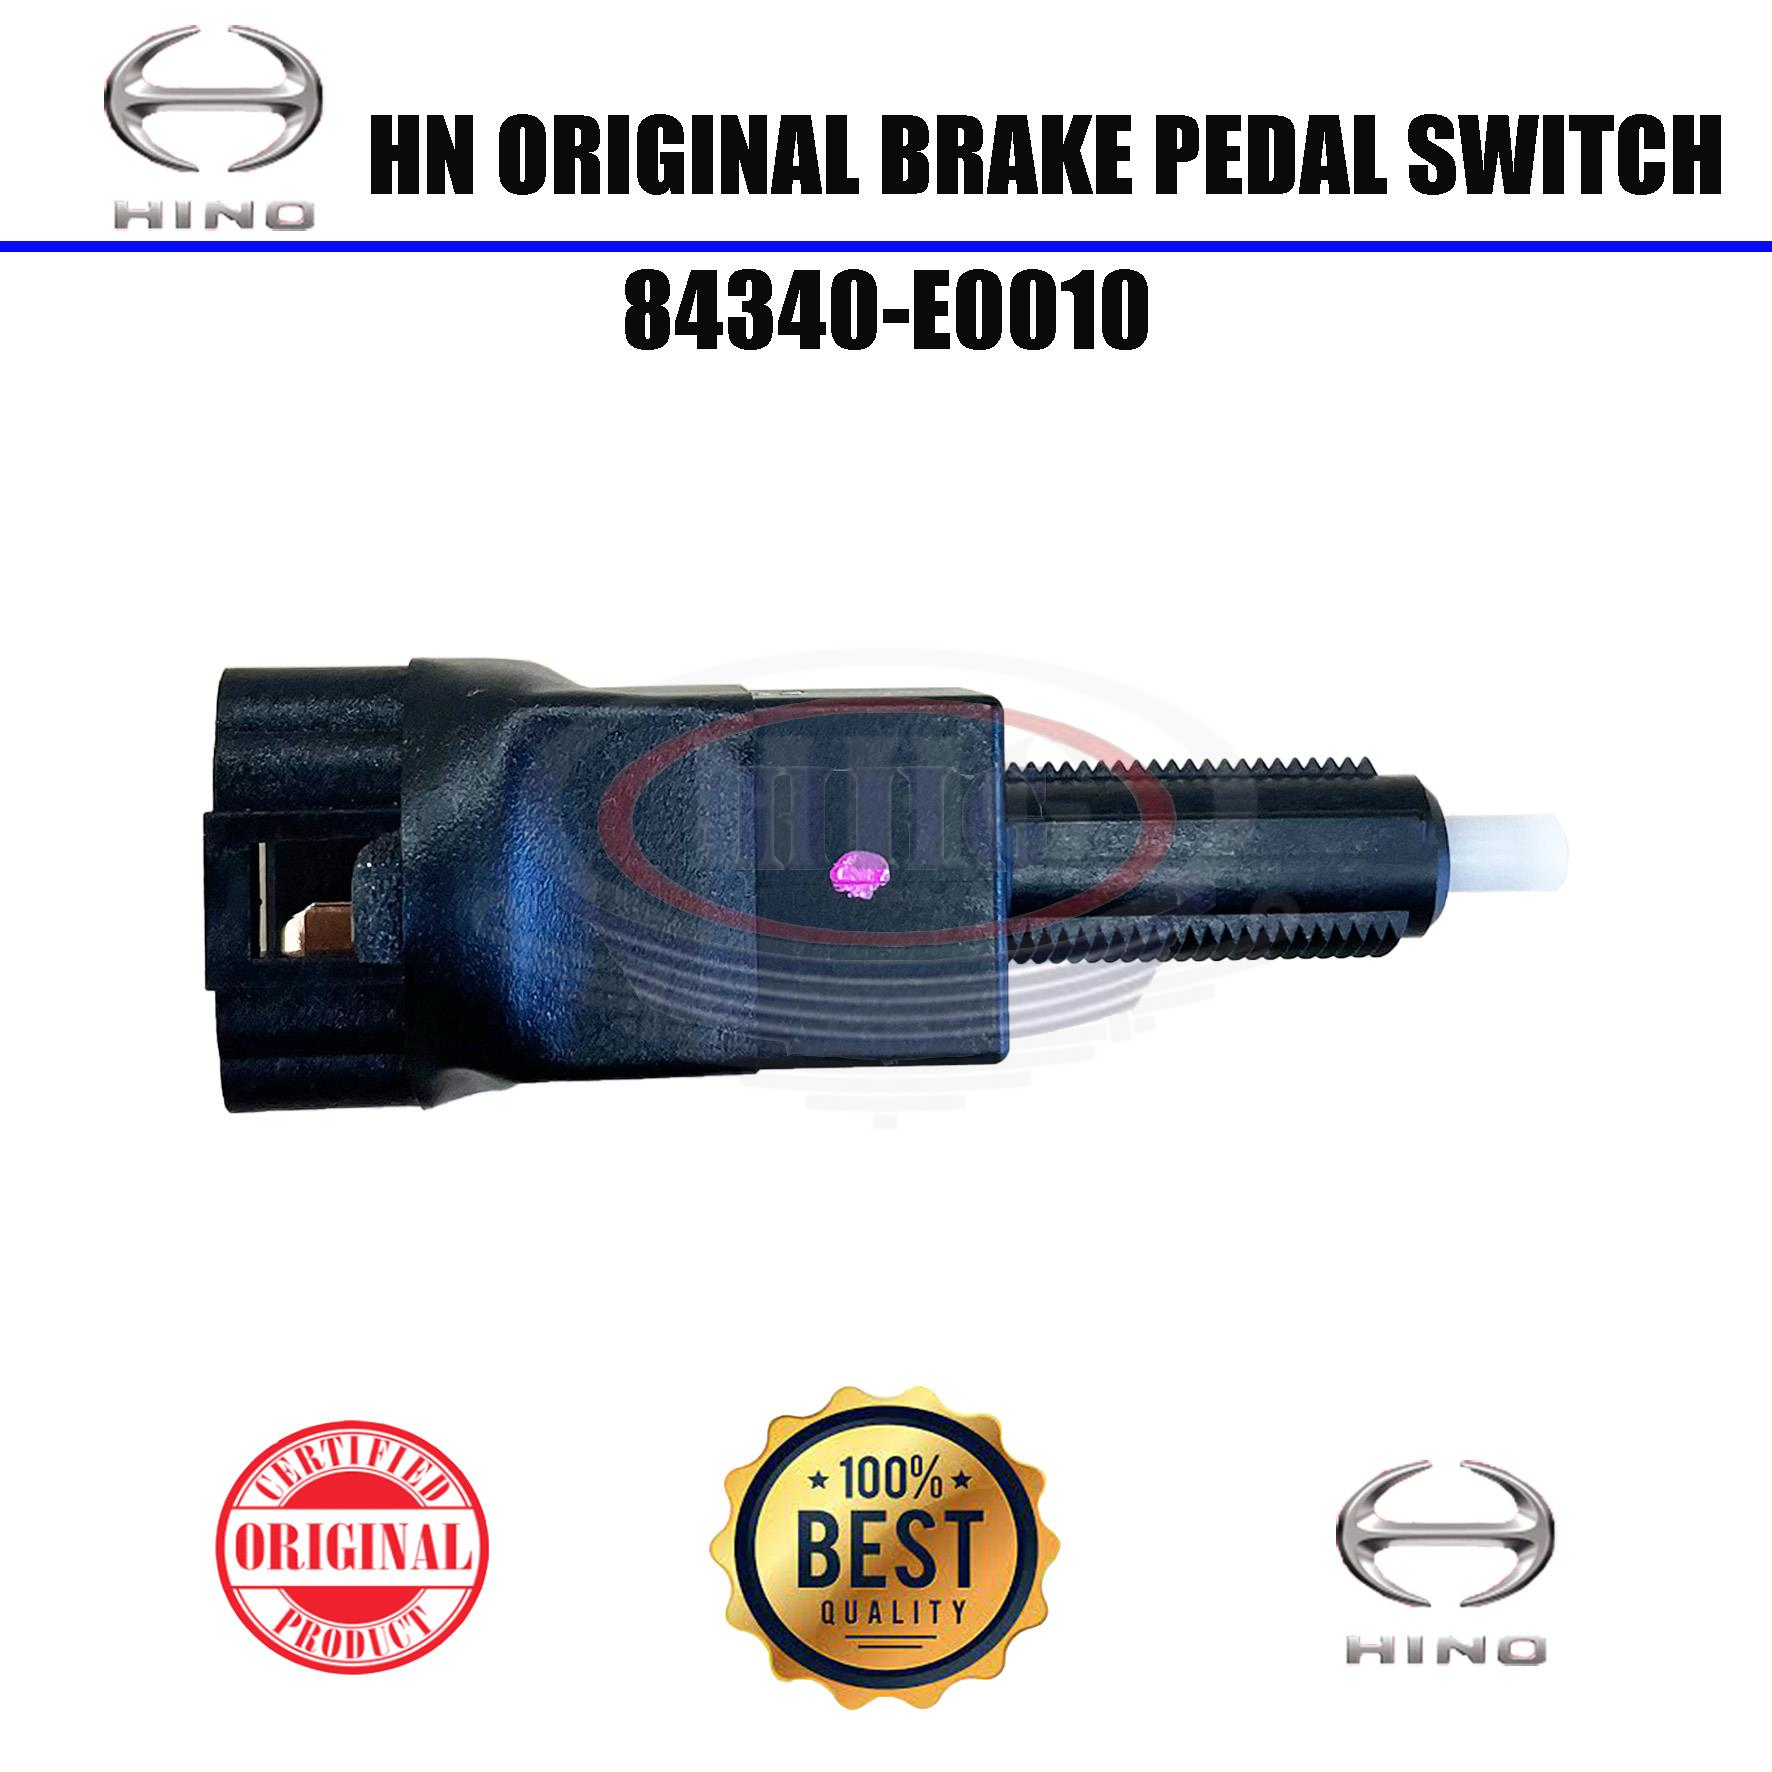 Hino Original Validus FM2P Brake Pedal Switch (84340-E0010)